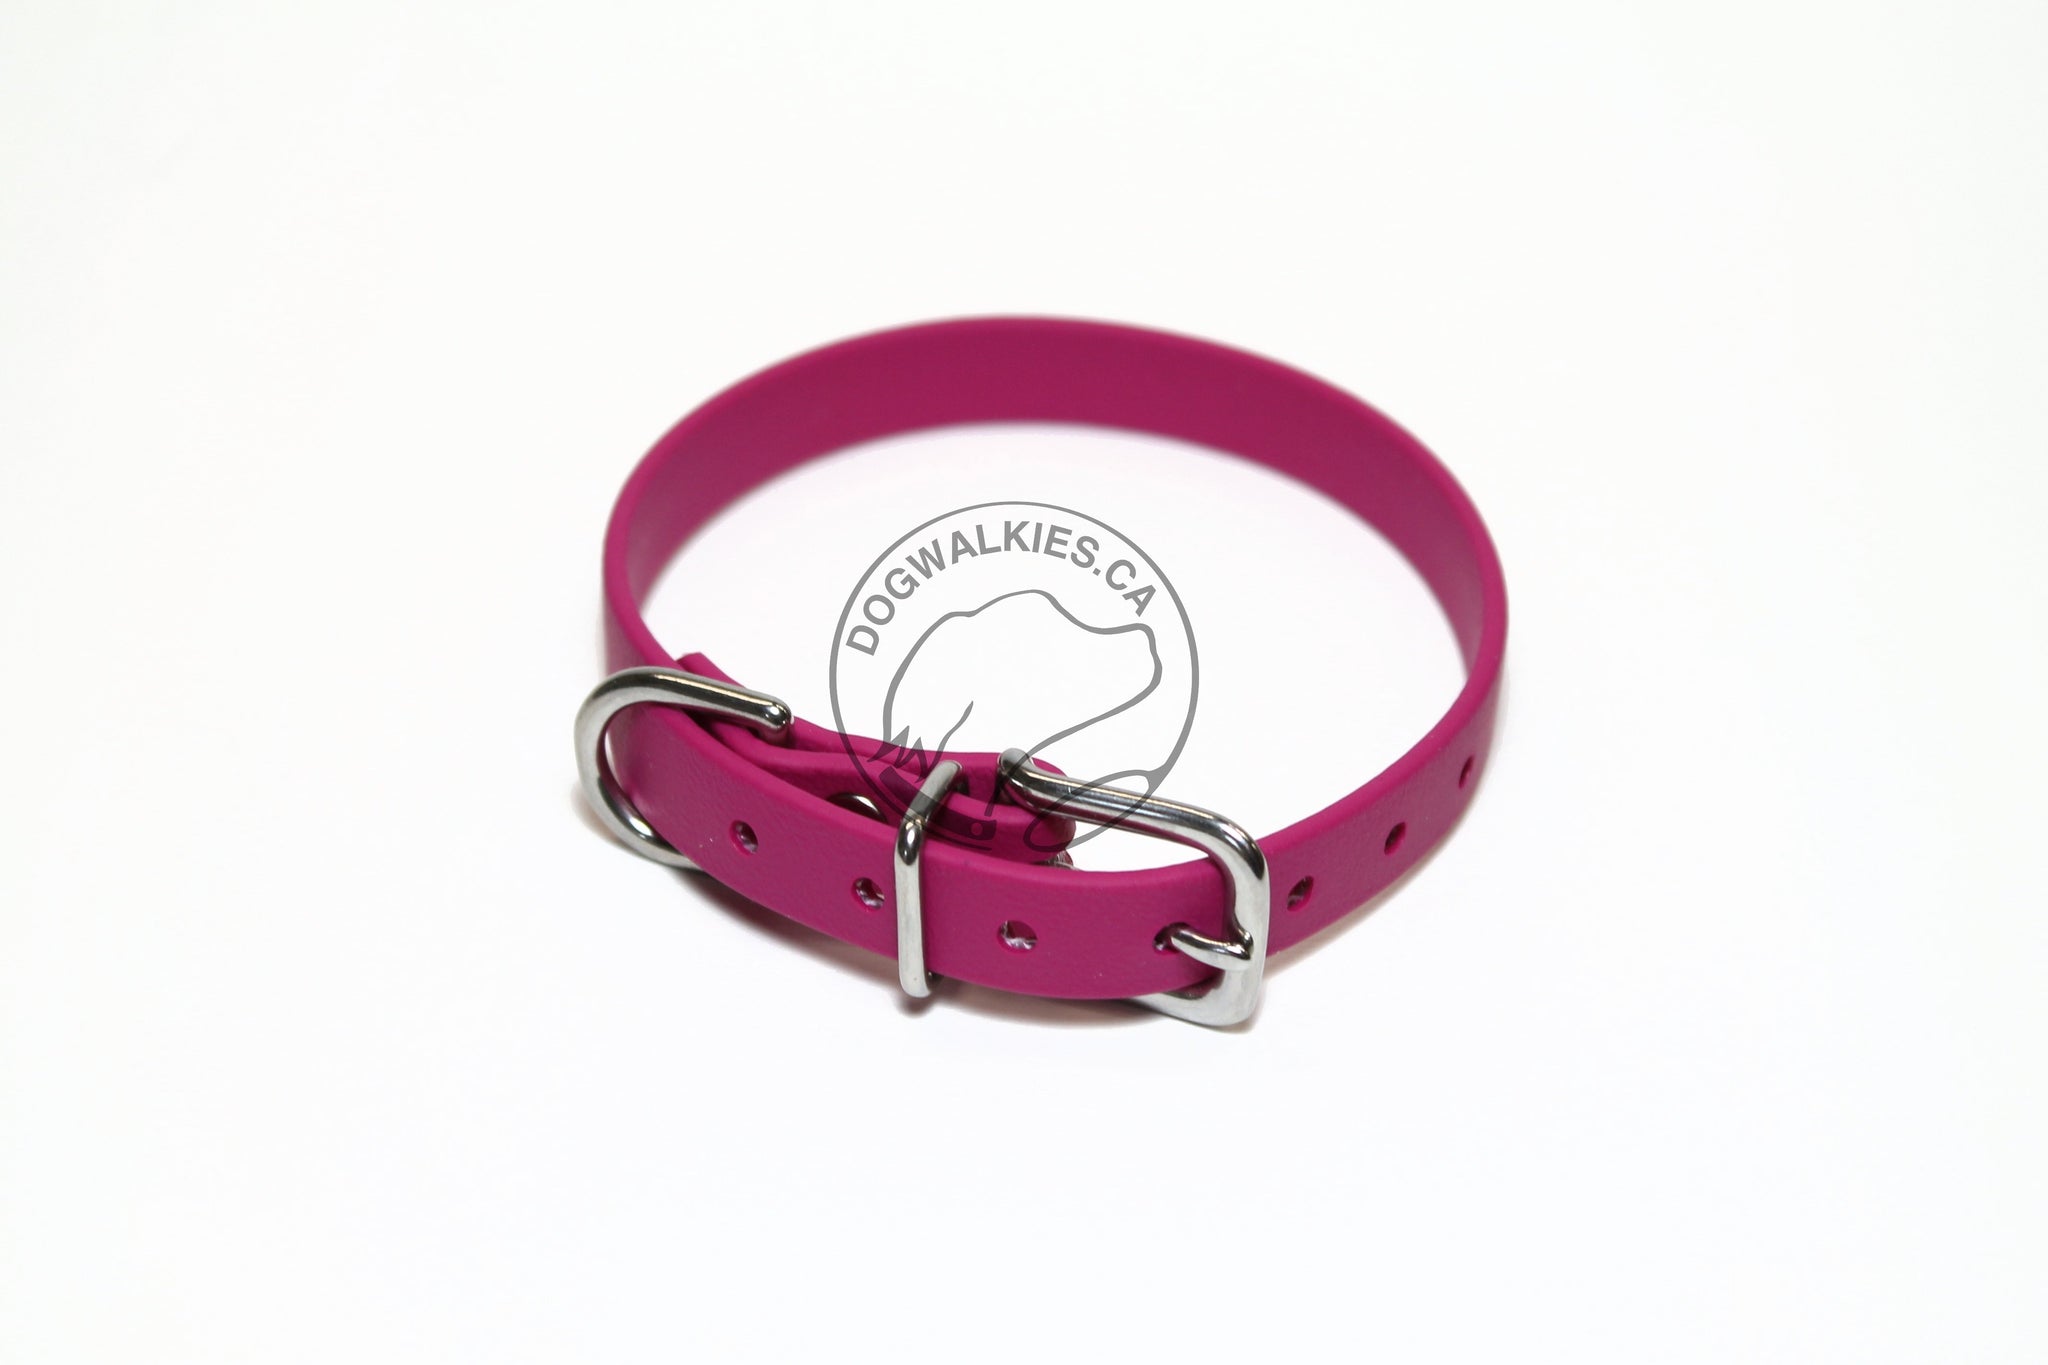 **NEW Raspberry Pink Biothane Small Dog Collar - 1/2" (12mm) wide